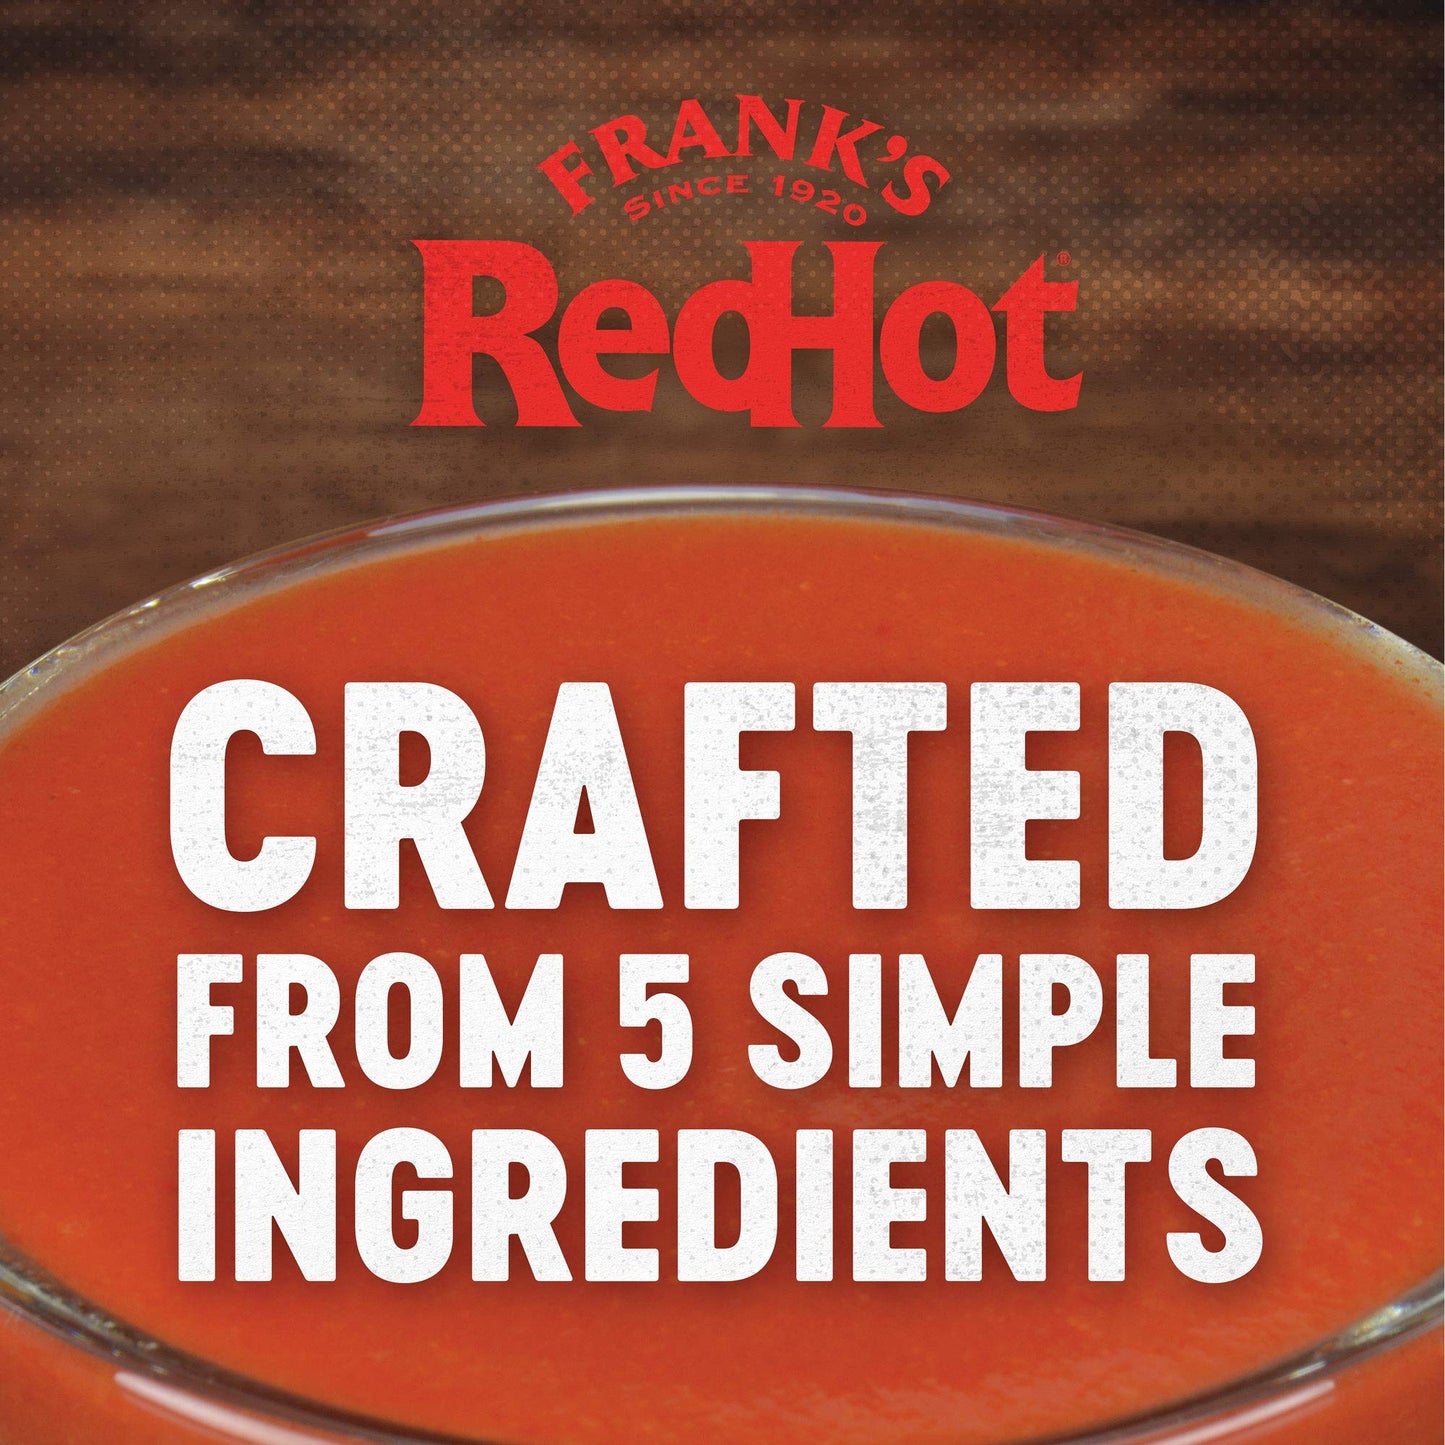 Frank's RedHot Original Hot Sauce, 12 fl oz